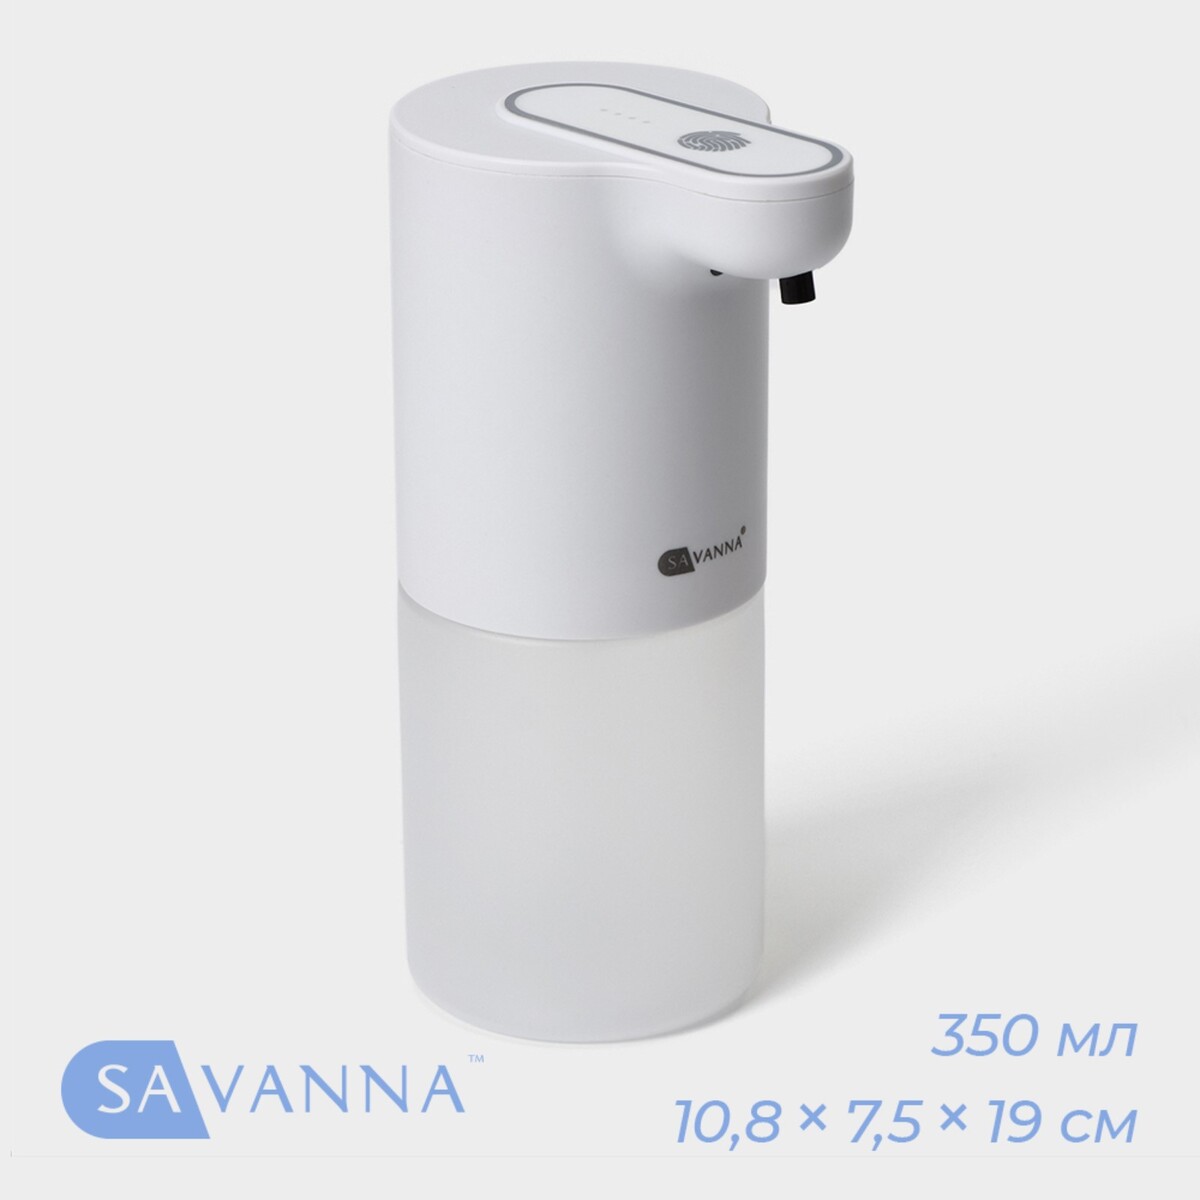 Диспенсер сенсорный для жидкого мыла savanna, 350 мл, пластик, цвет белый диспенсер brabantia для жидкого мыла белый